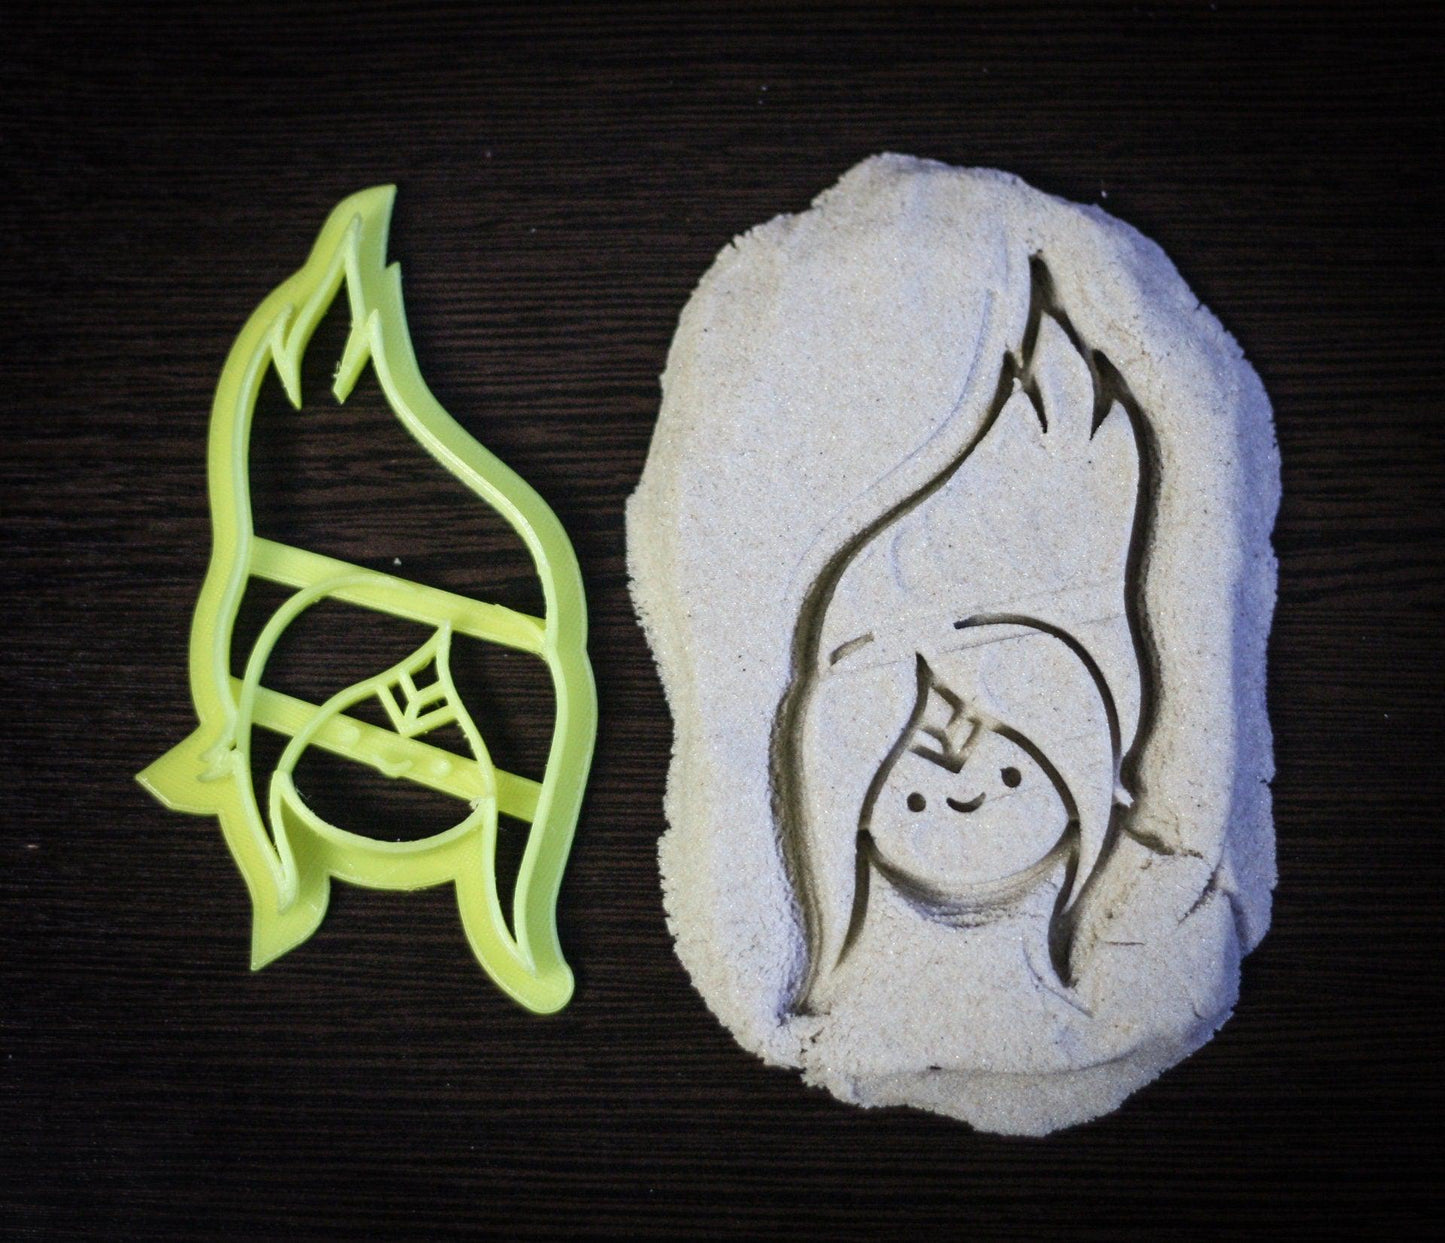 Finn,  Jake, Princess Bubblegum, Flame Princess  - AT  cookie cutters set - 3DPrintProps